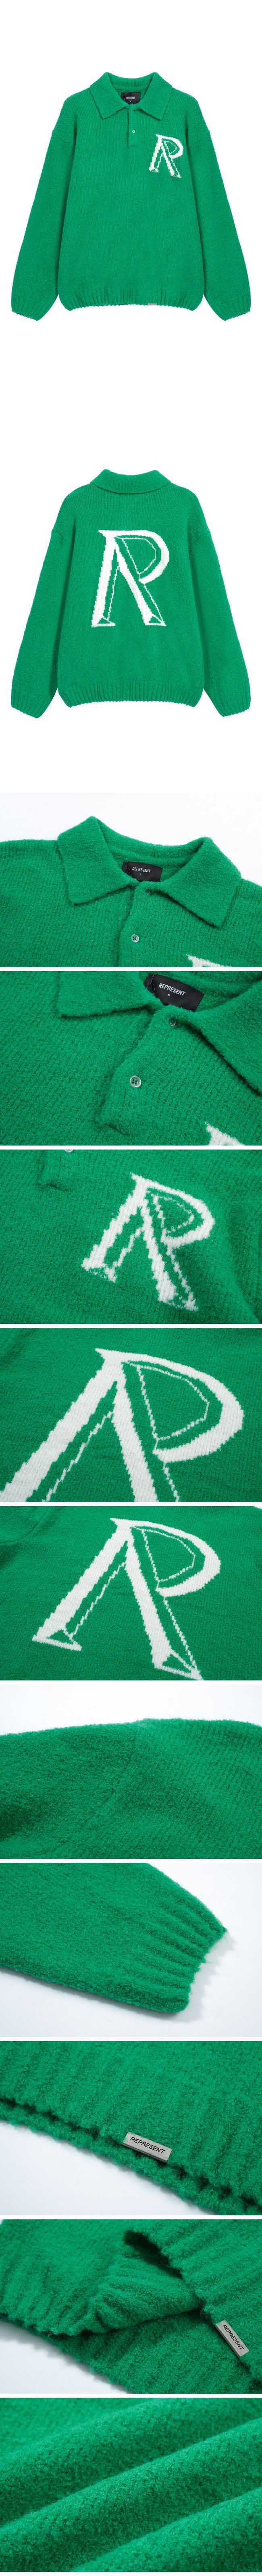 Represent R Logo Sweater リプレゼント R ロゴ セーター グリーン